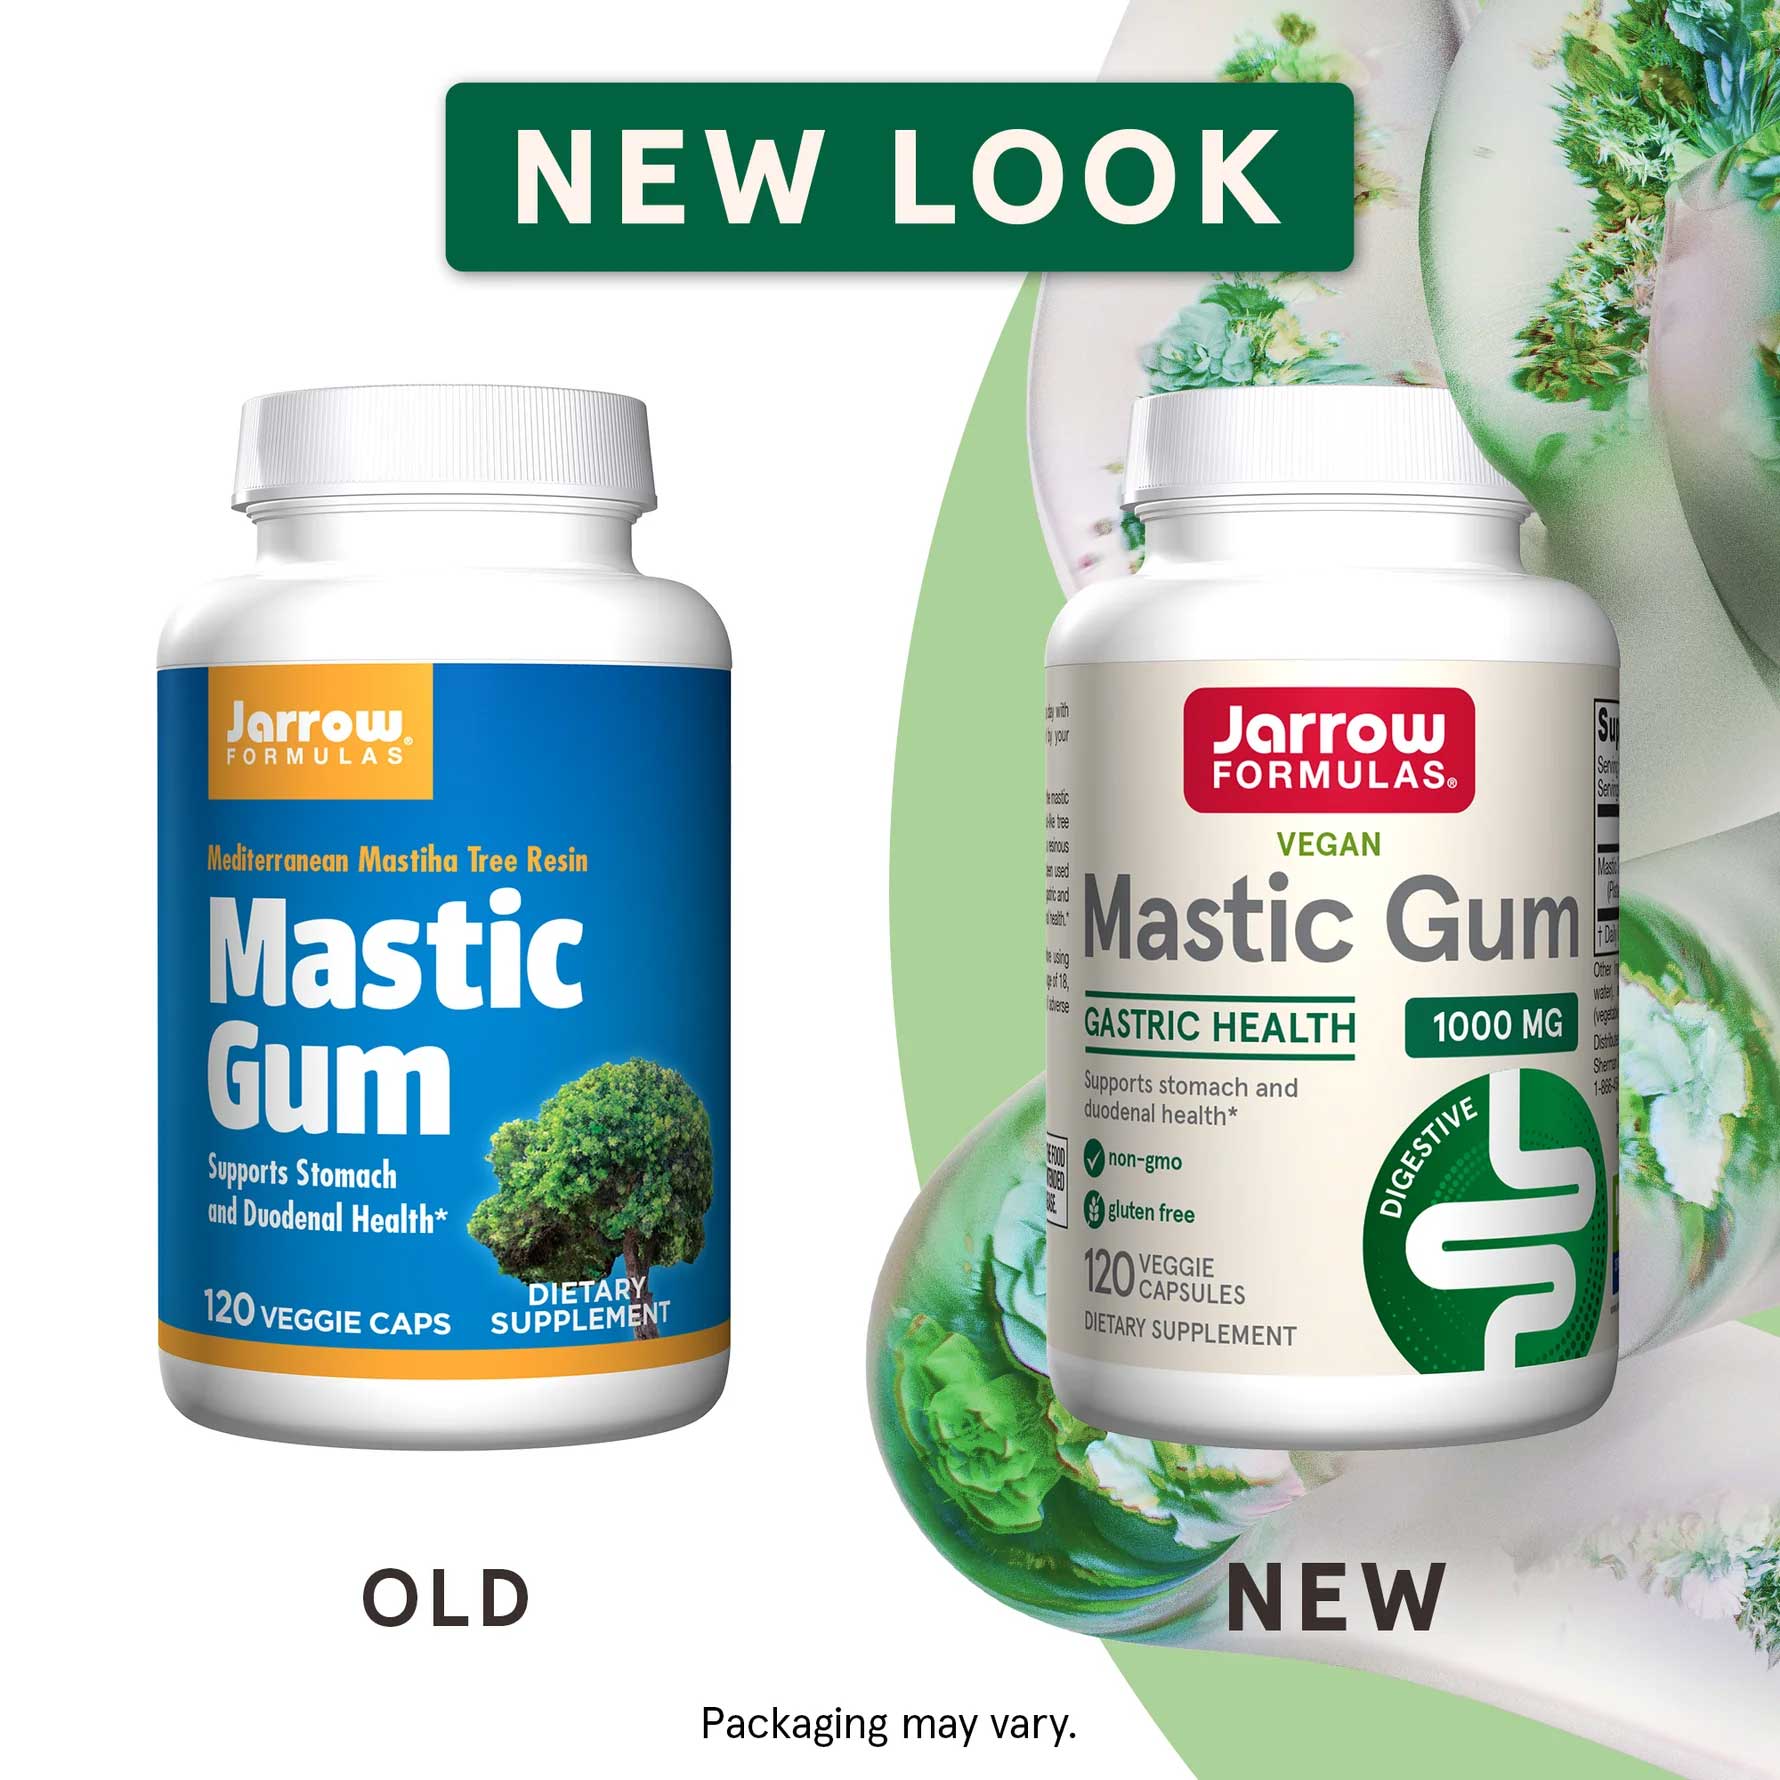 Mastic Gum - Digestive Support - 1,000 MG (60 Vegetarian Capsules